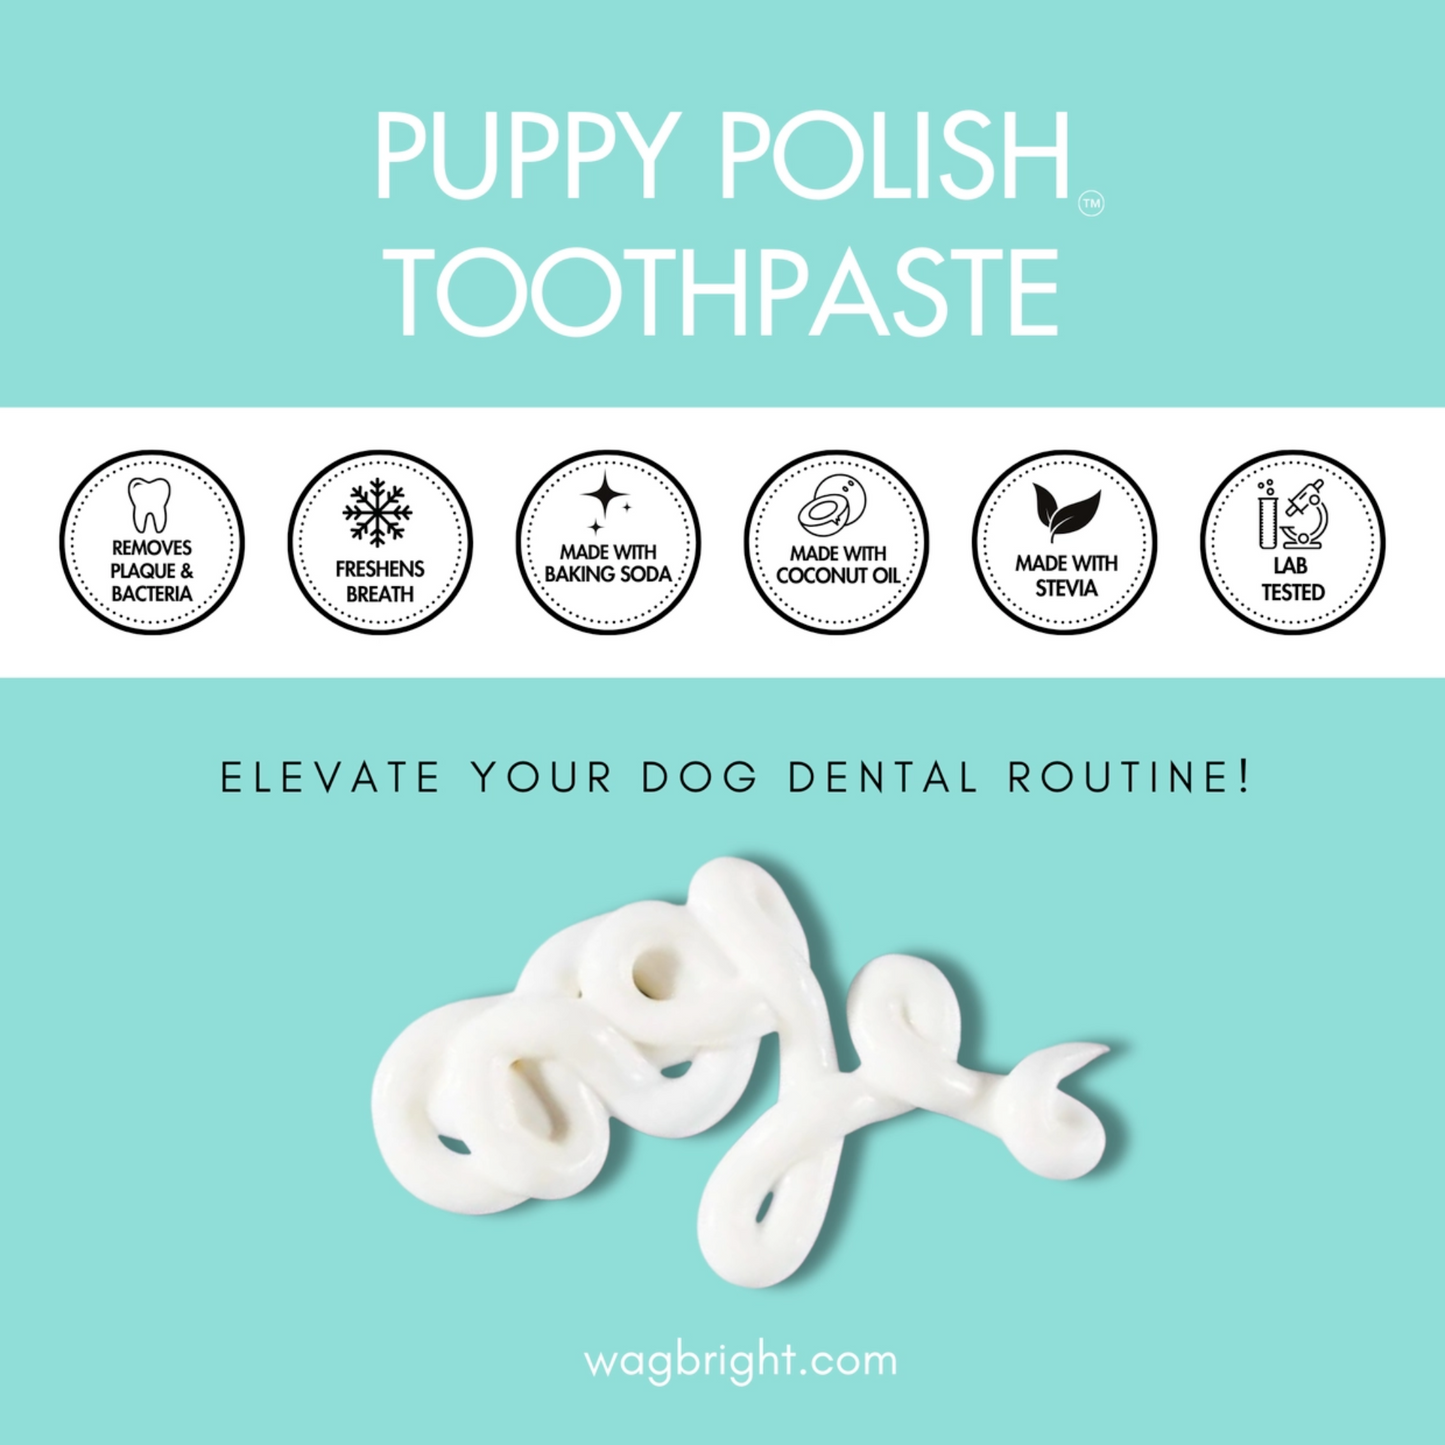 Puppy Polish Toothpaste